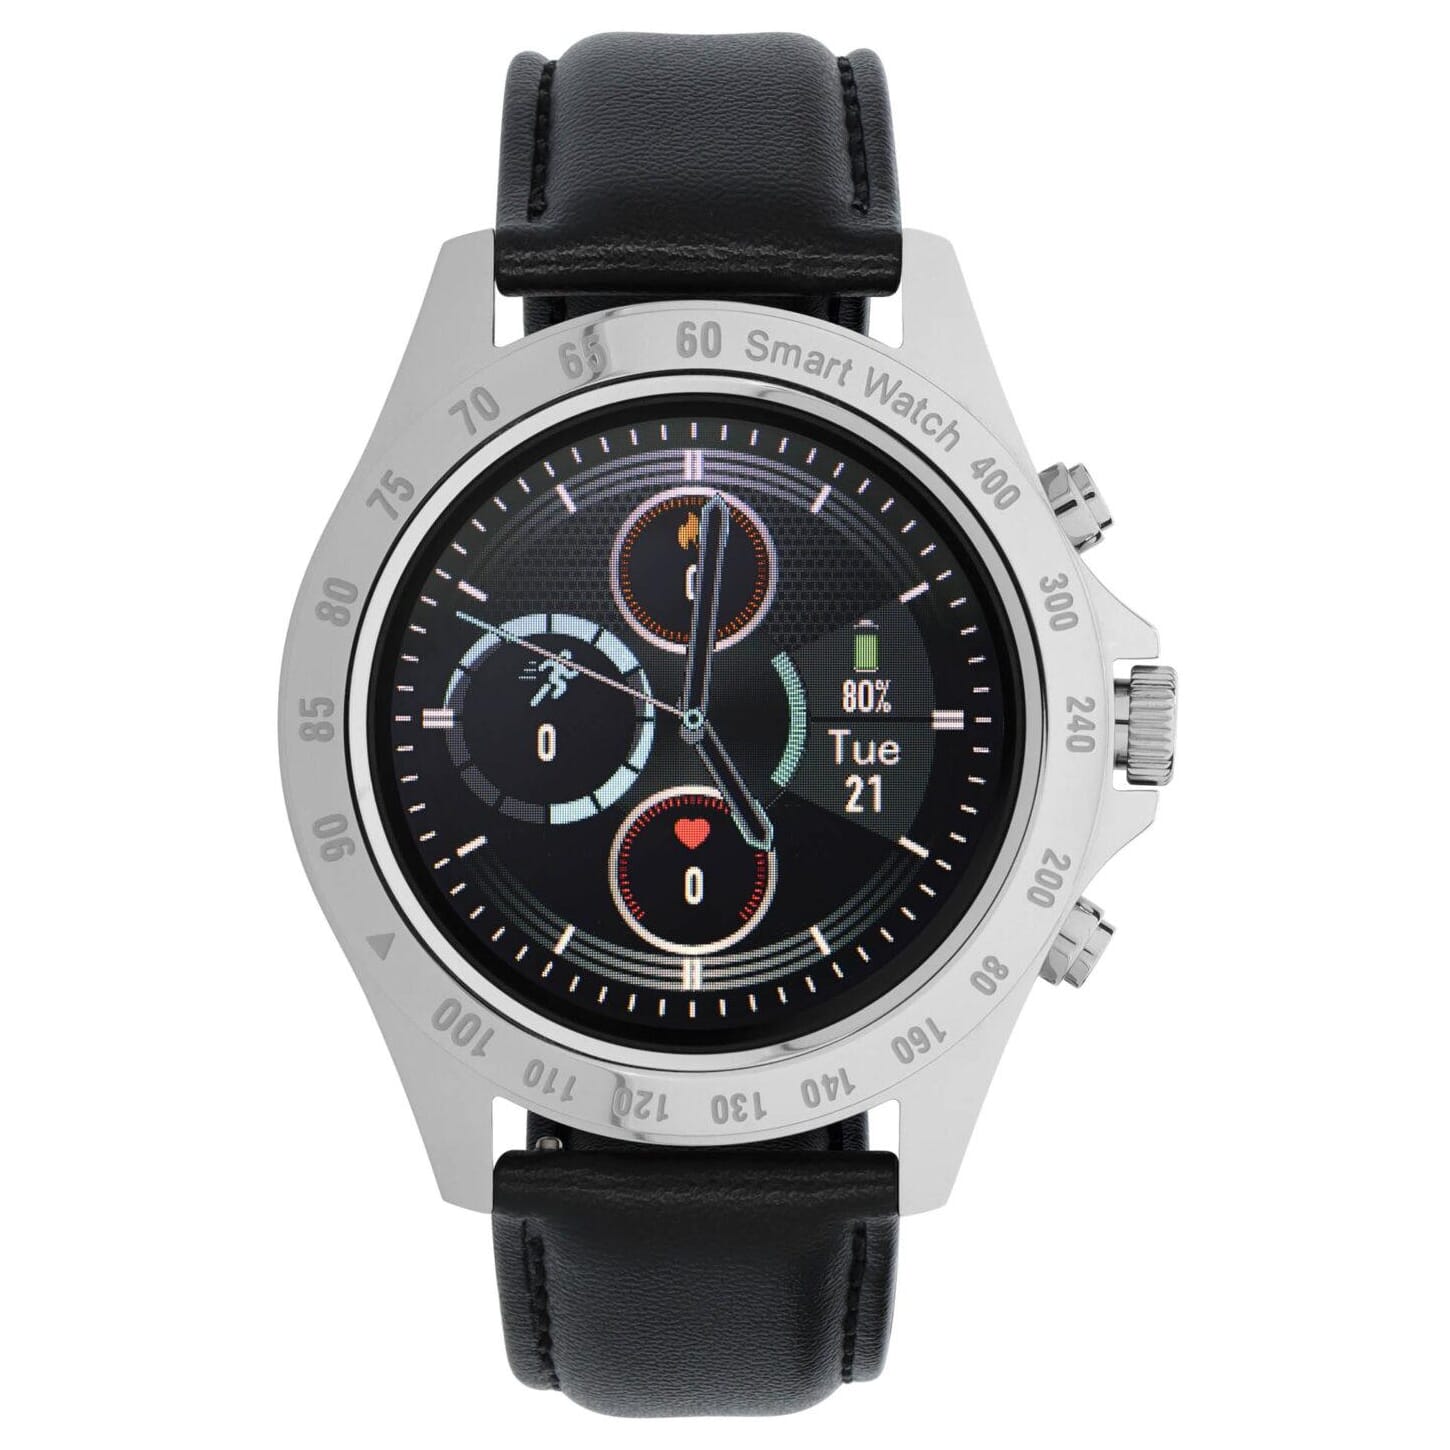 Zegarek męski Smartwatch Garett V8 Rt Srebrno-czarny, Skórzany